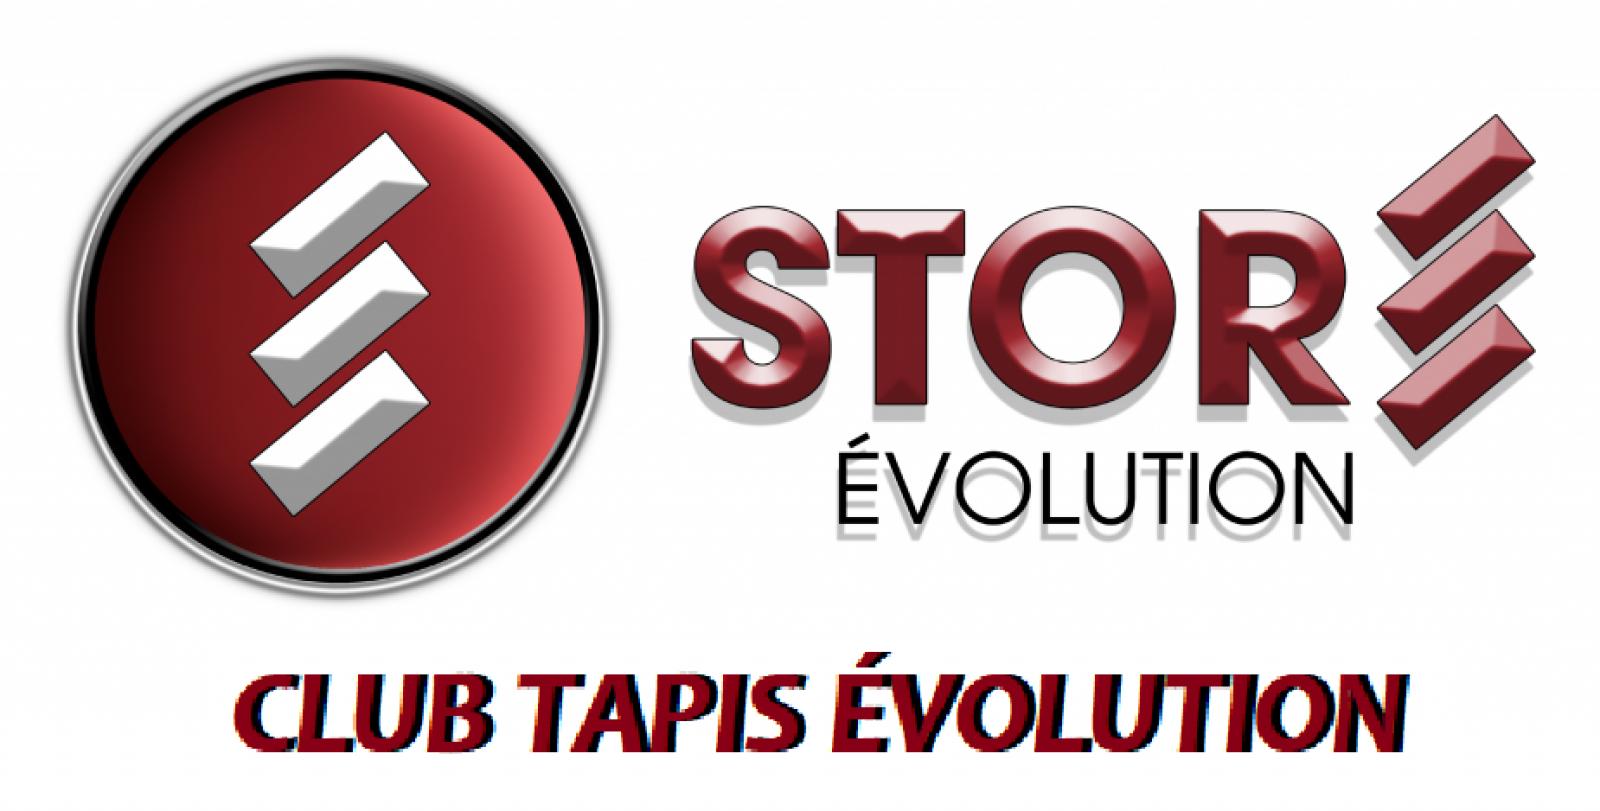 Club tapis évolution. Logo